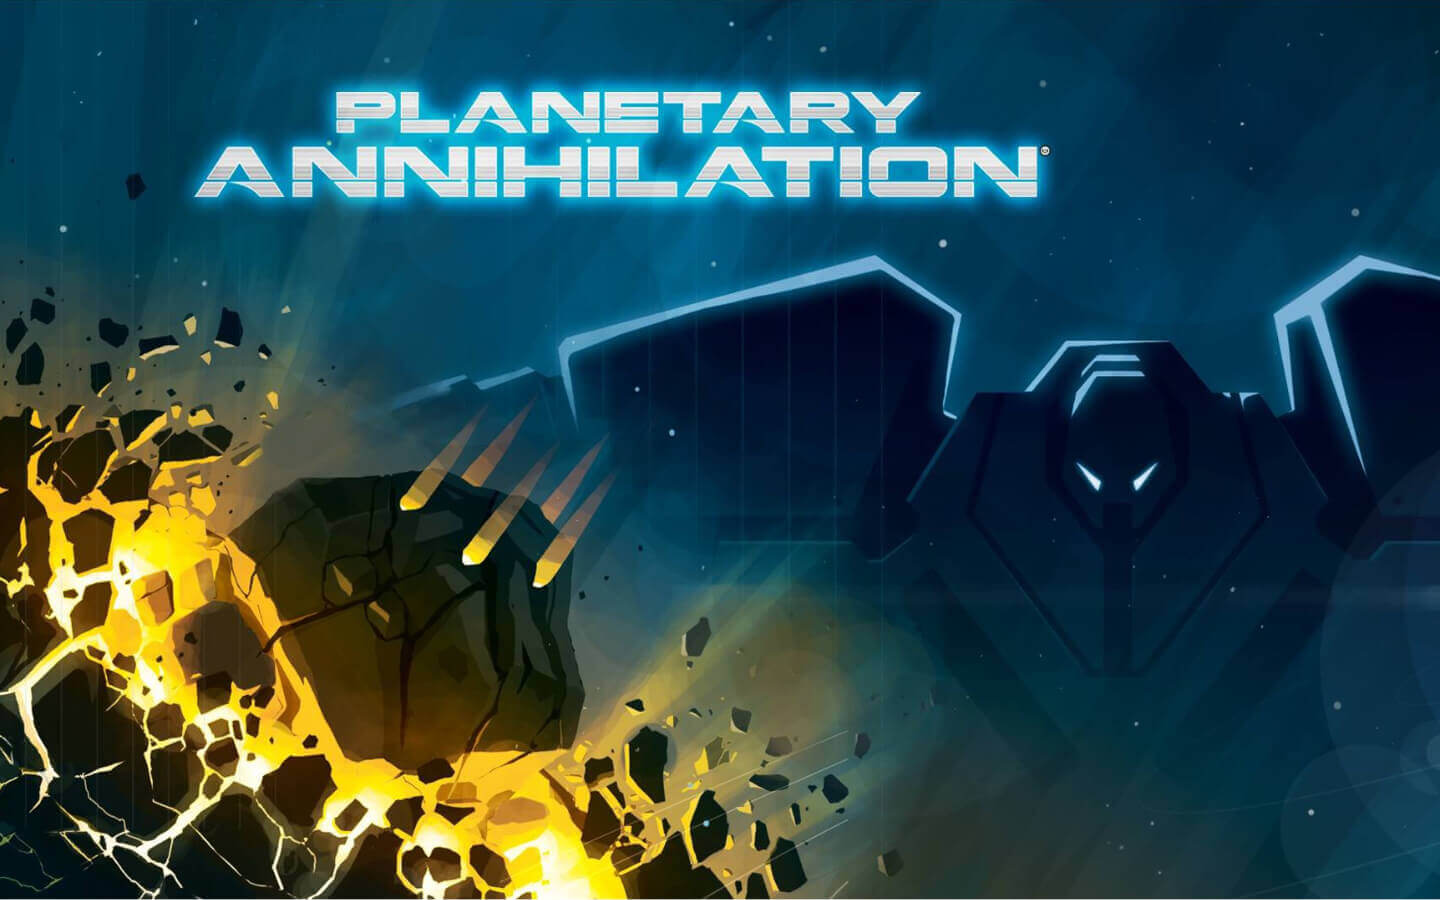 planetary annihilation system designer